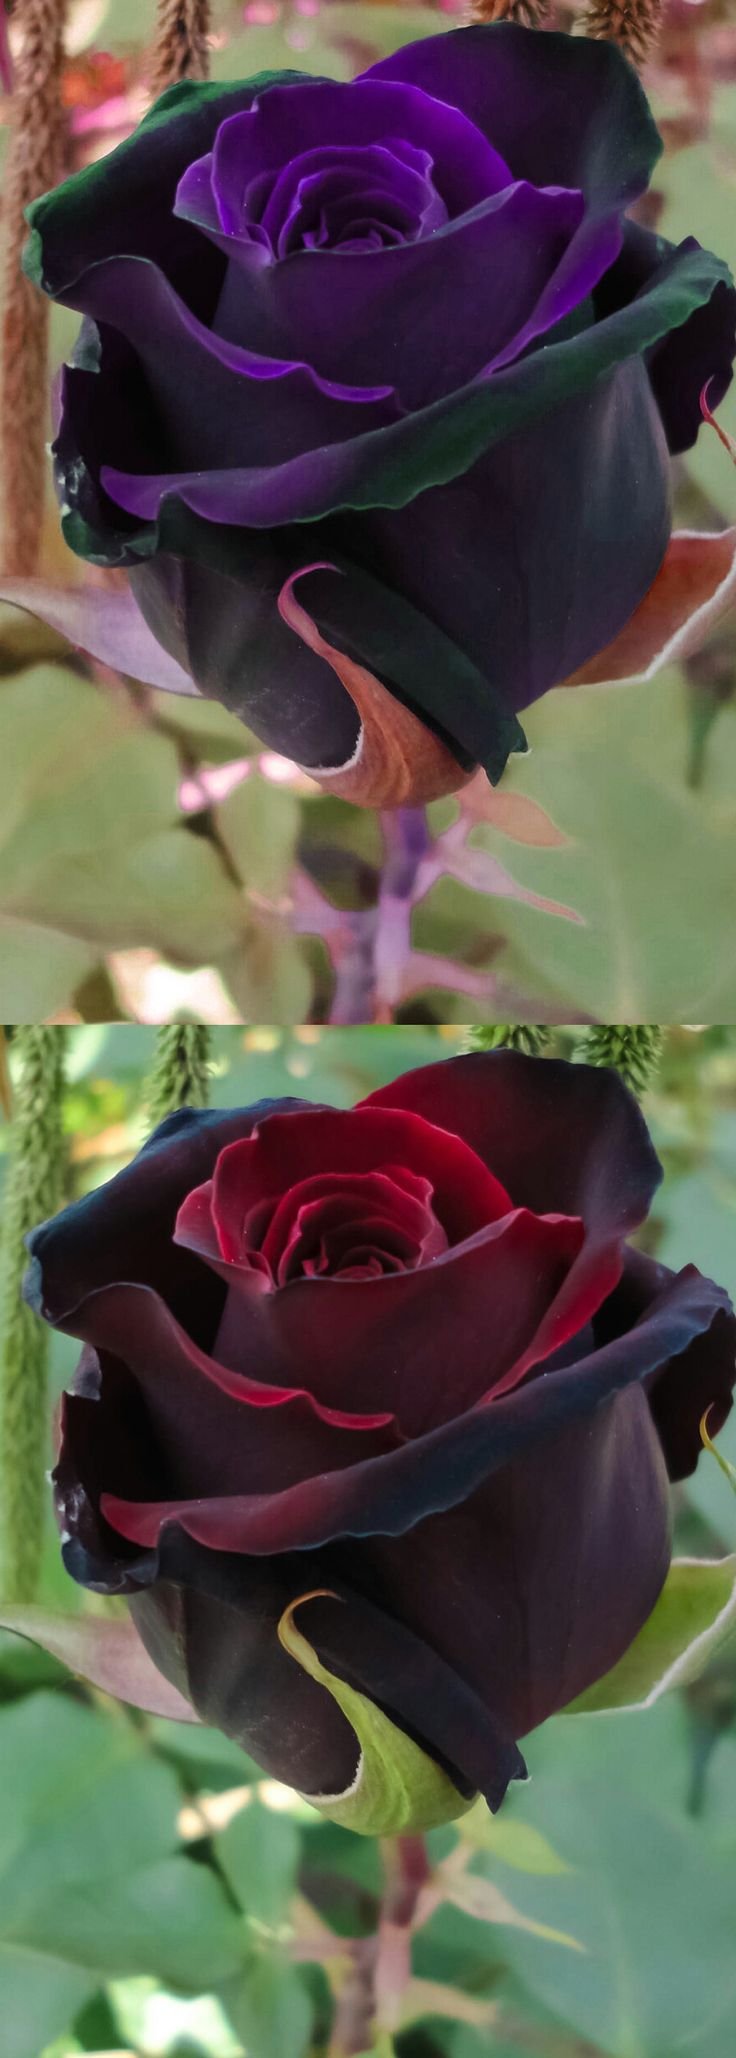 Роза чайно-гибридная Блэк баккара